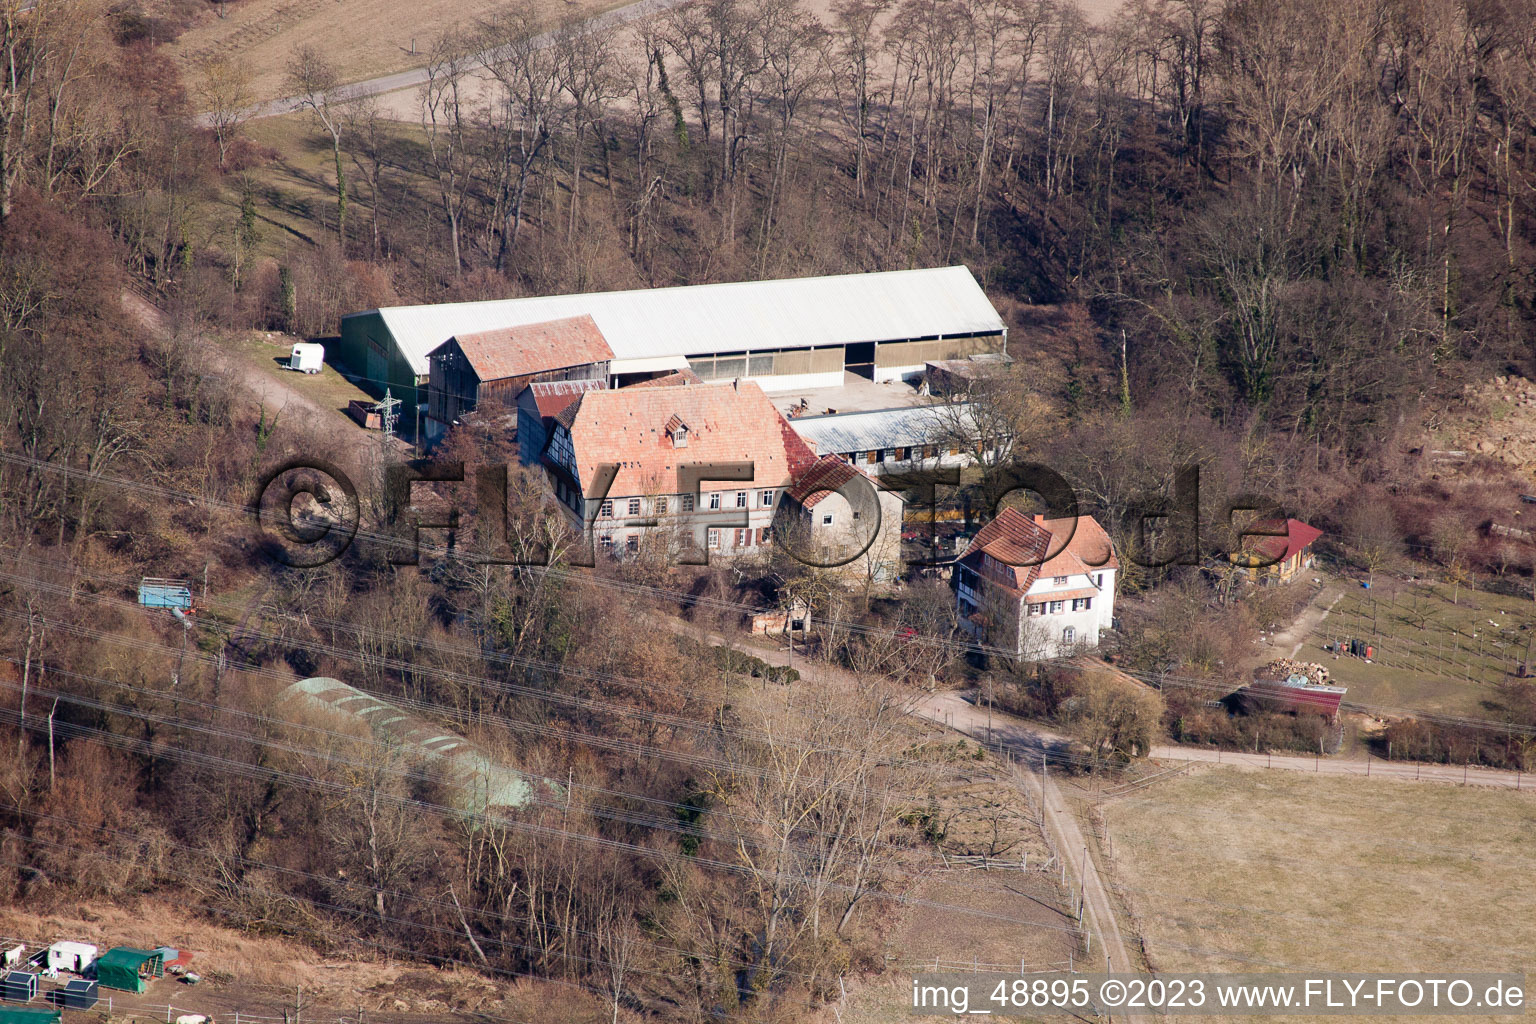 Oblique view of Wanzheim Mill in Rheinzabern in the state Rhineland-Palatinate, Germany